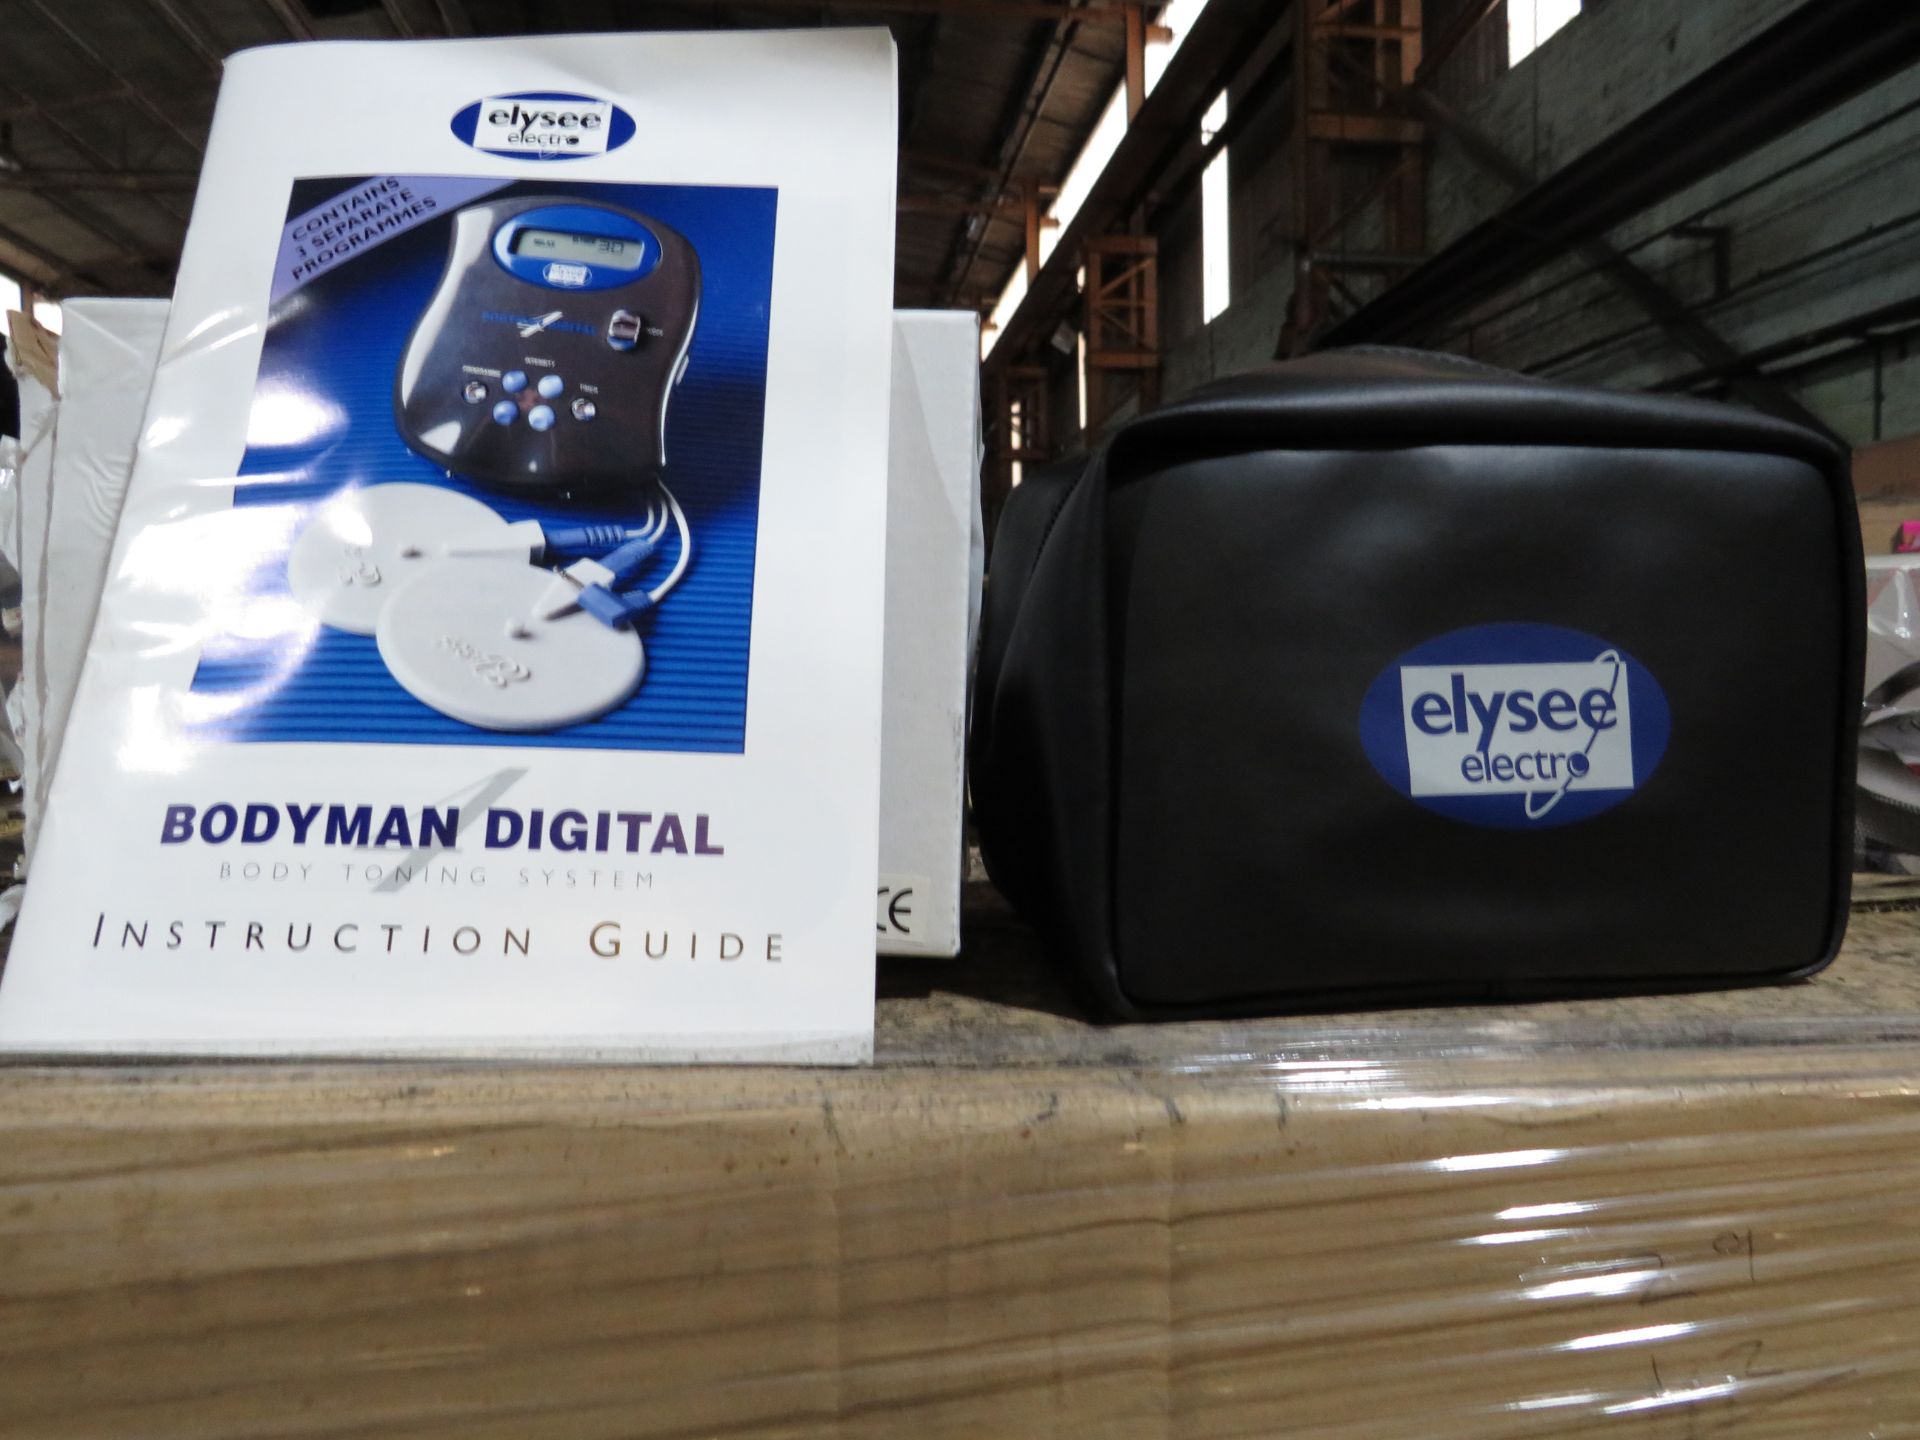 12x elysee Bodyman digital body toning system, new and boxed